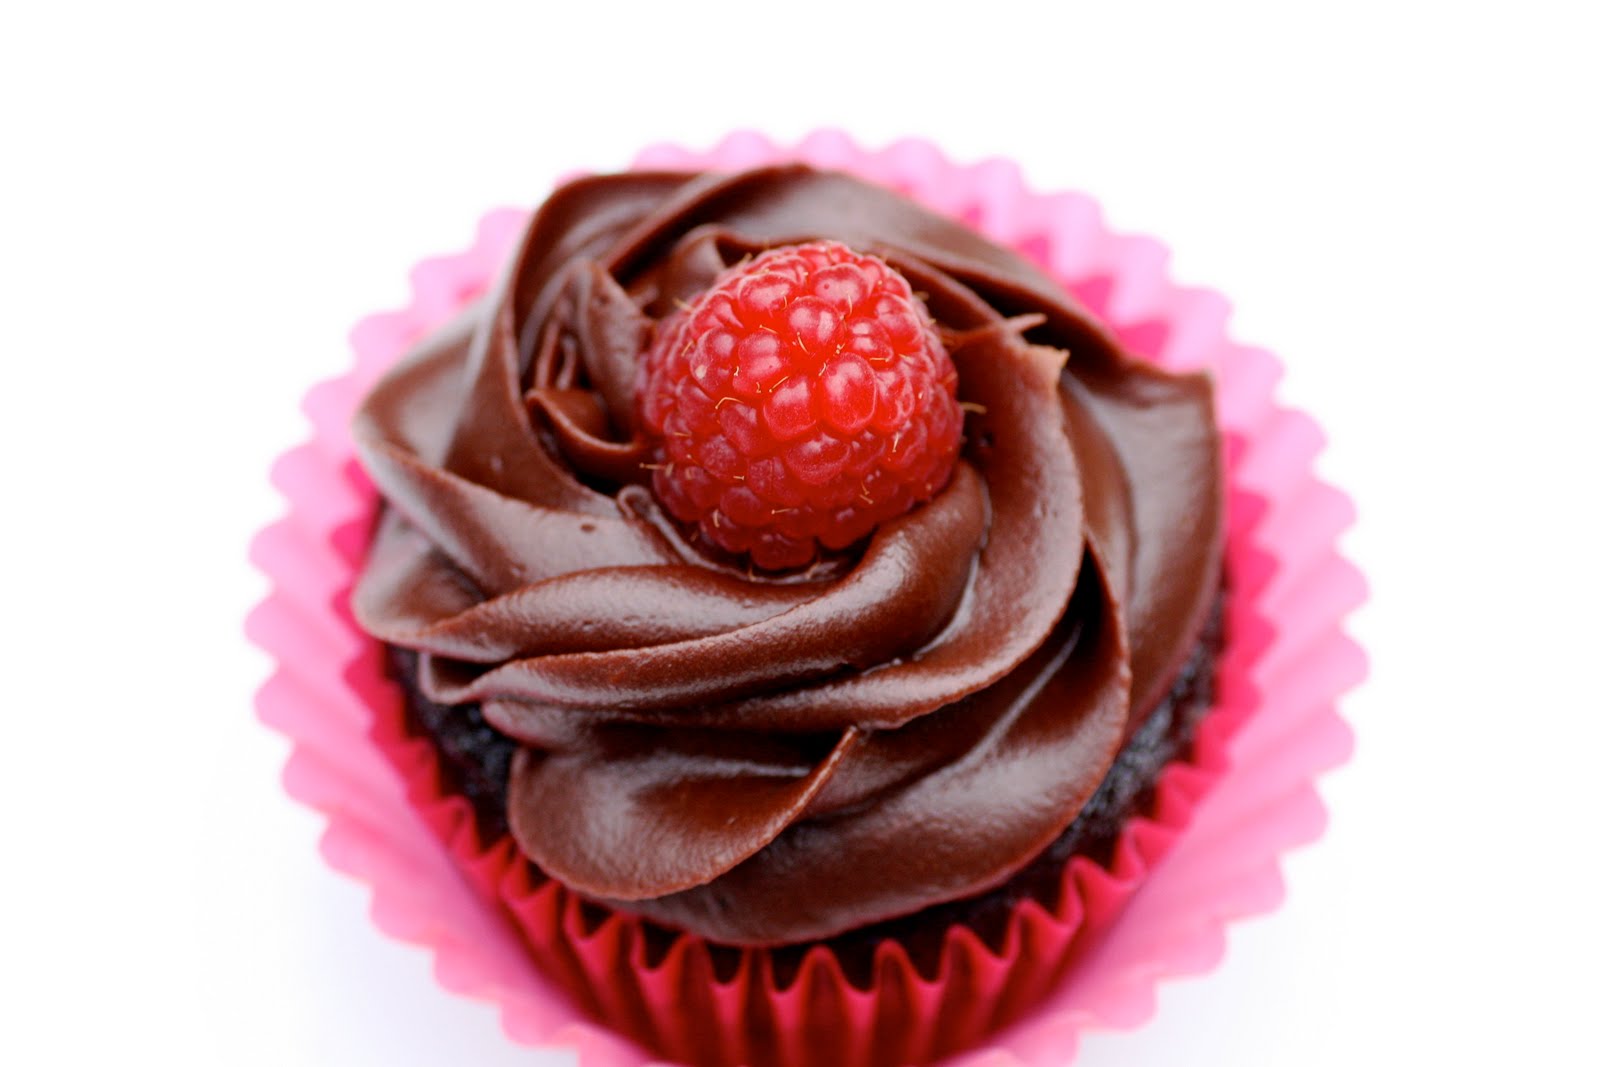 here is the recipe: Chocolate Raspberry Cupcakes